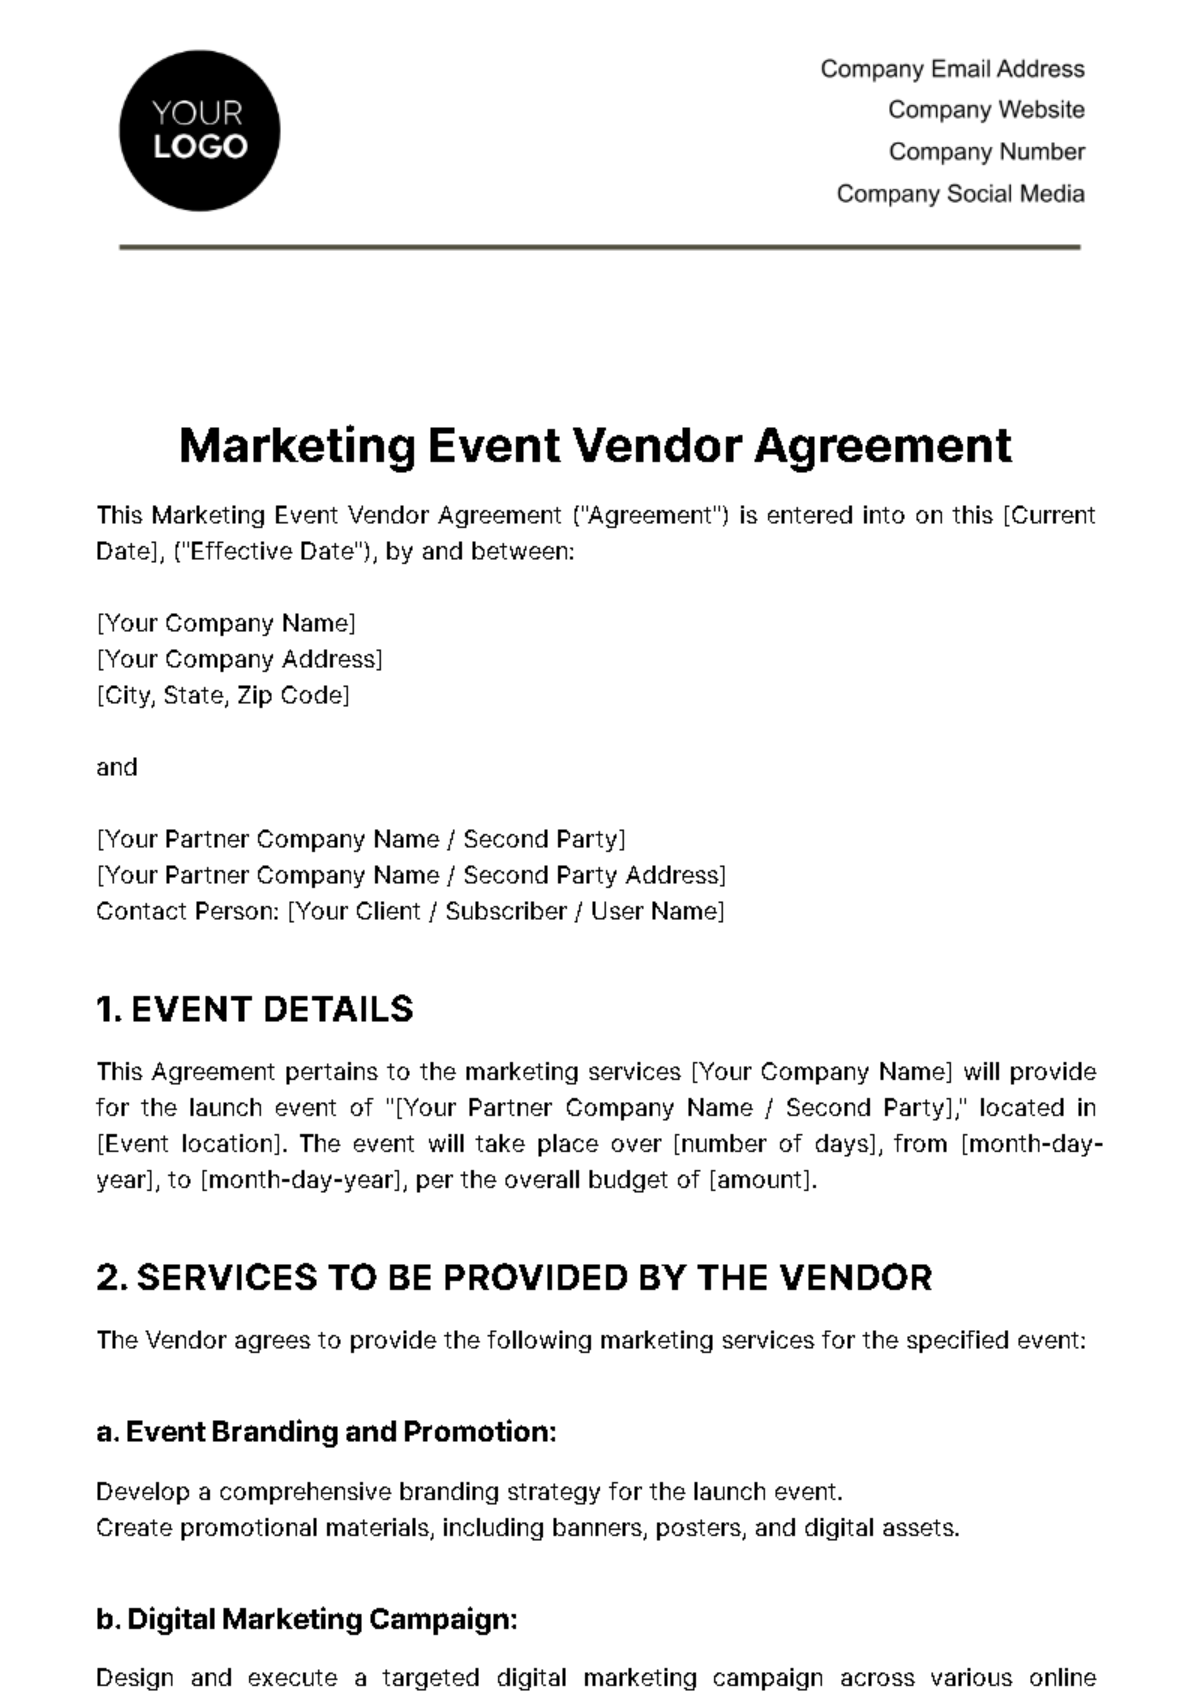 Free Marketing Event Vendor Agreement Template